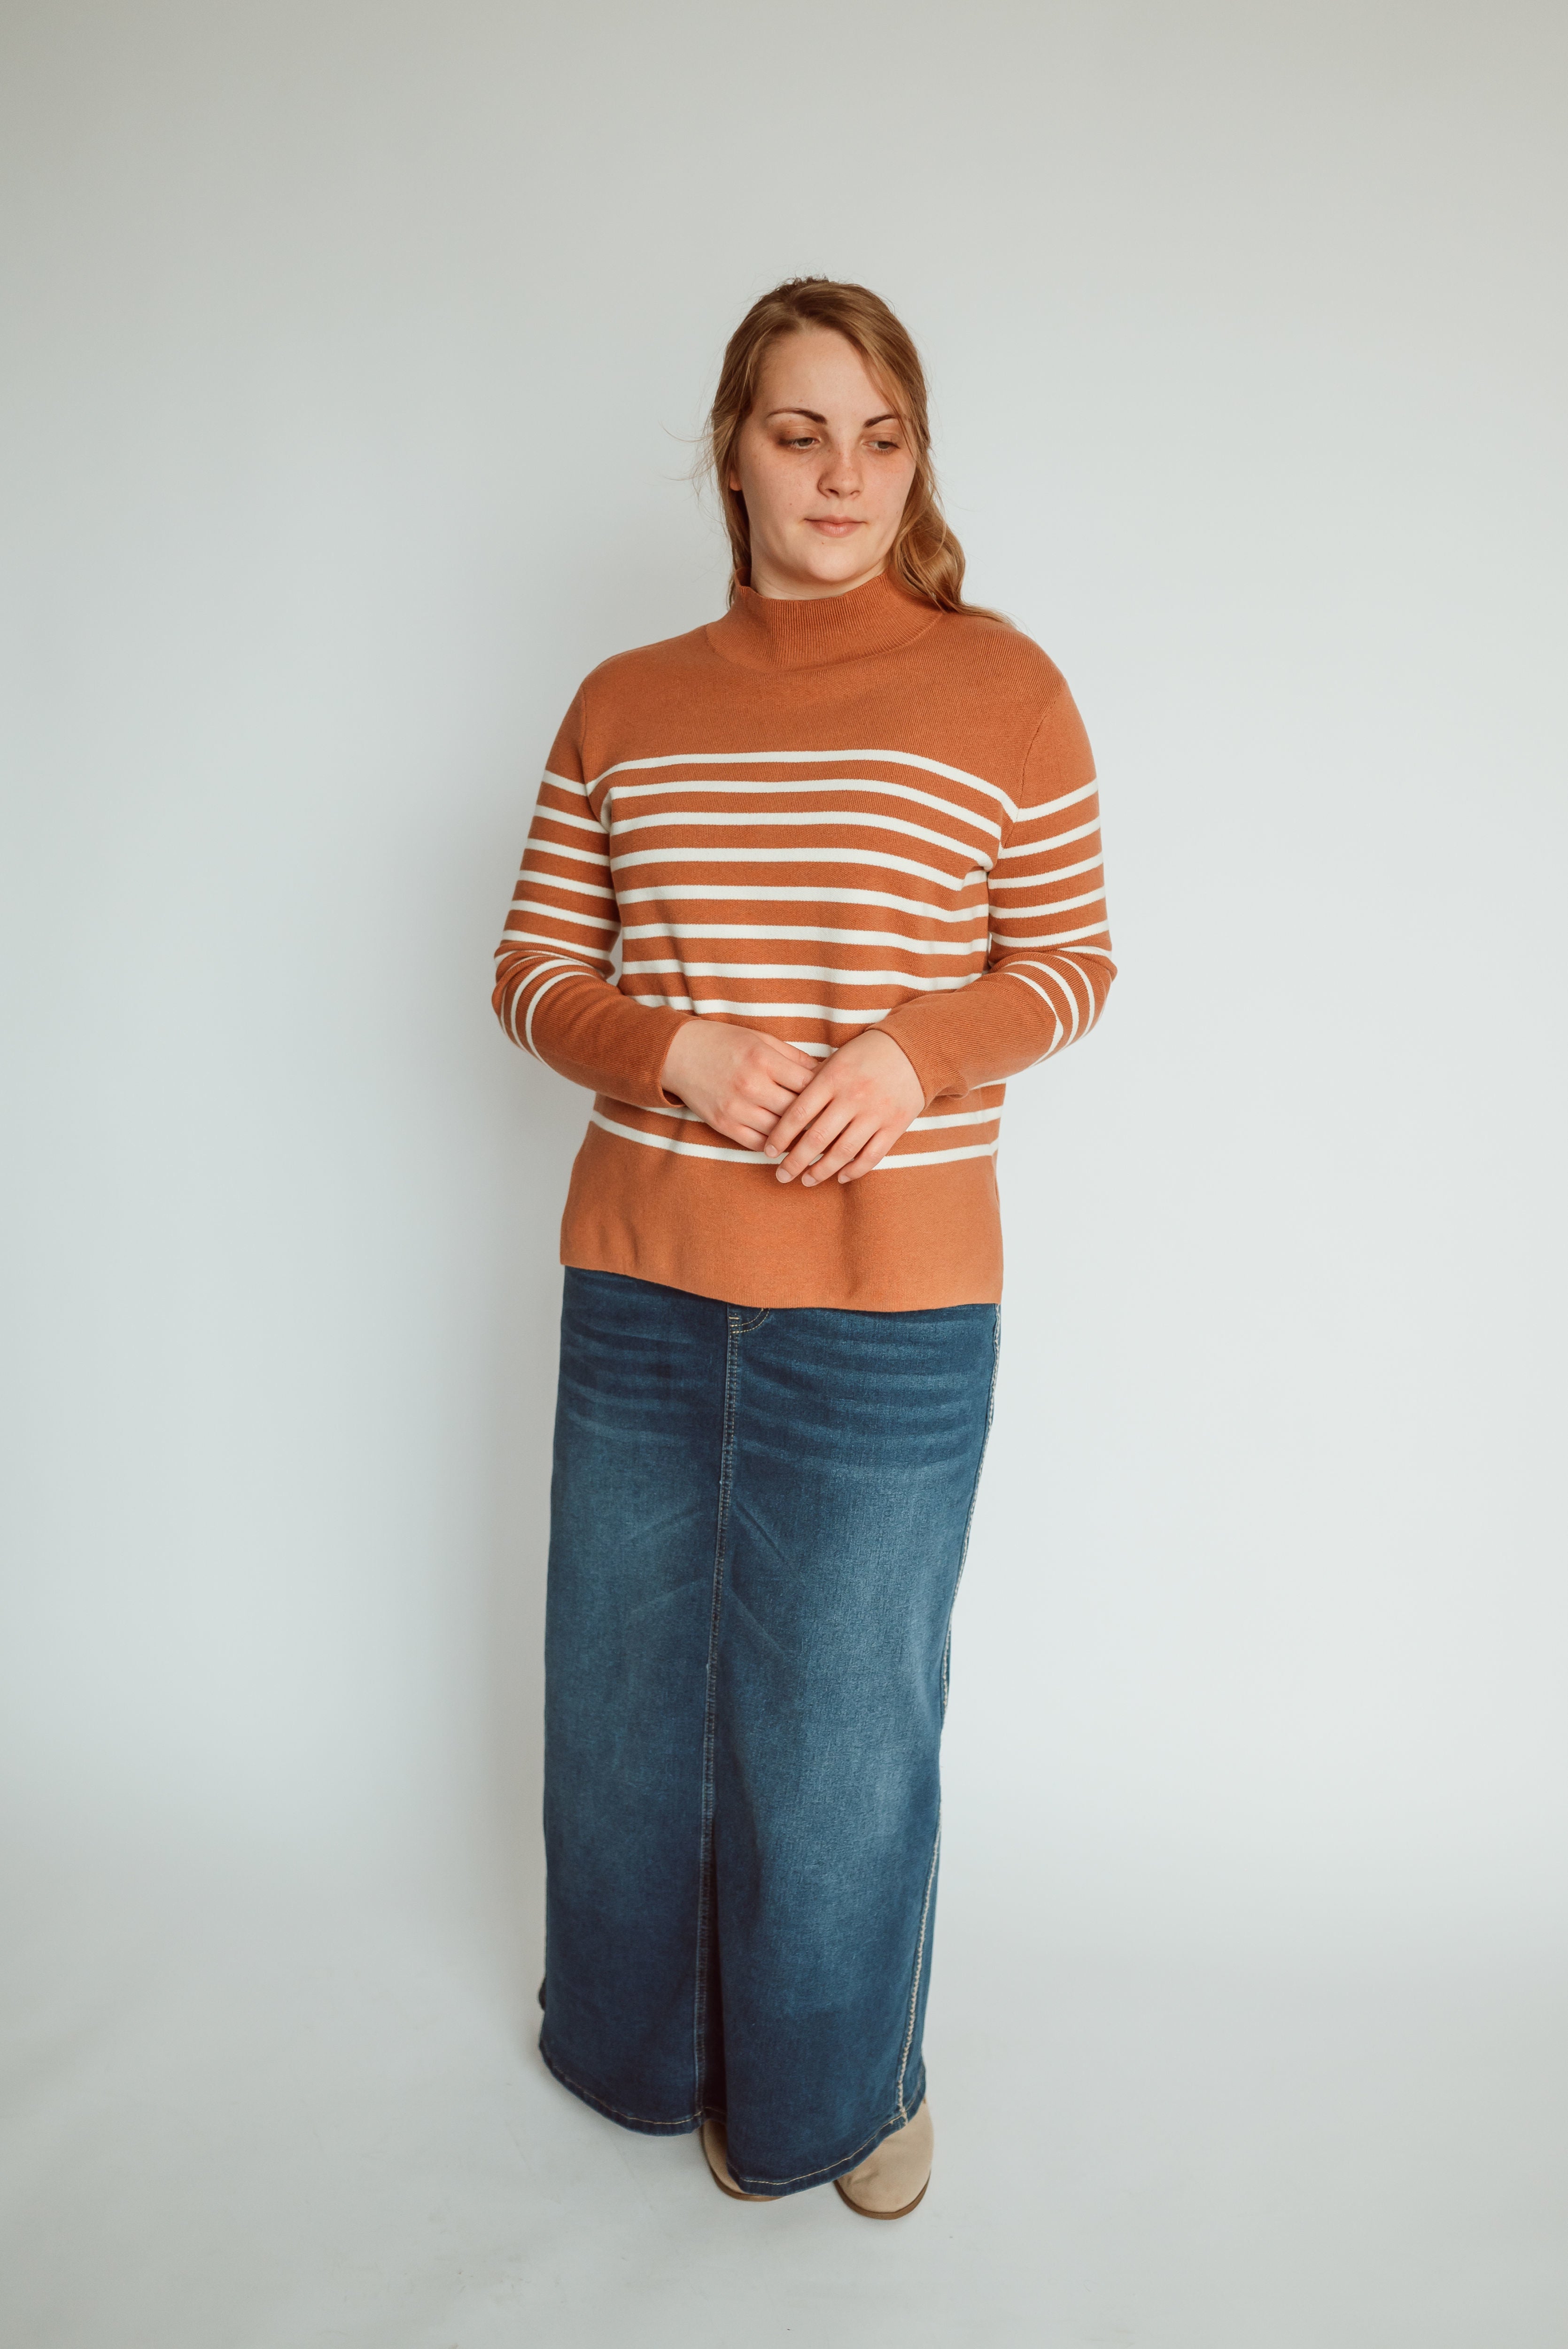 Jasmine Sweater in Caramel/White Stripes - FINAL SALE